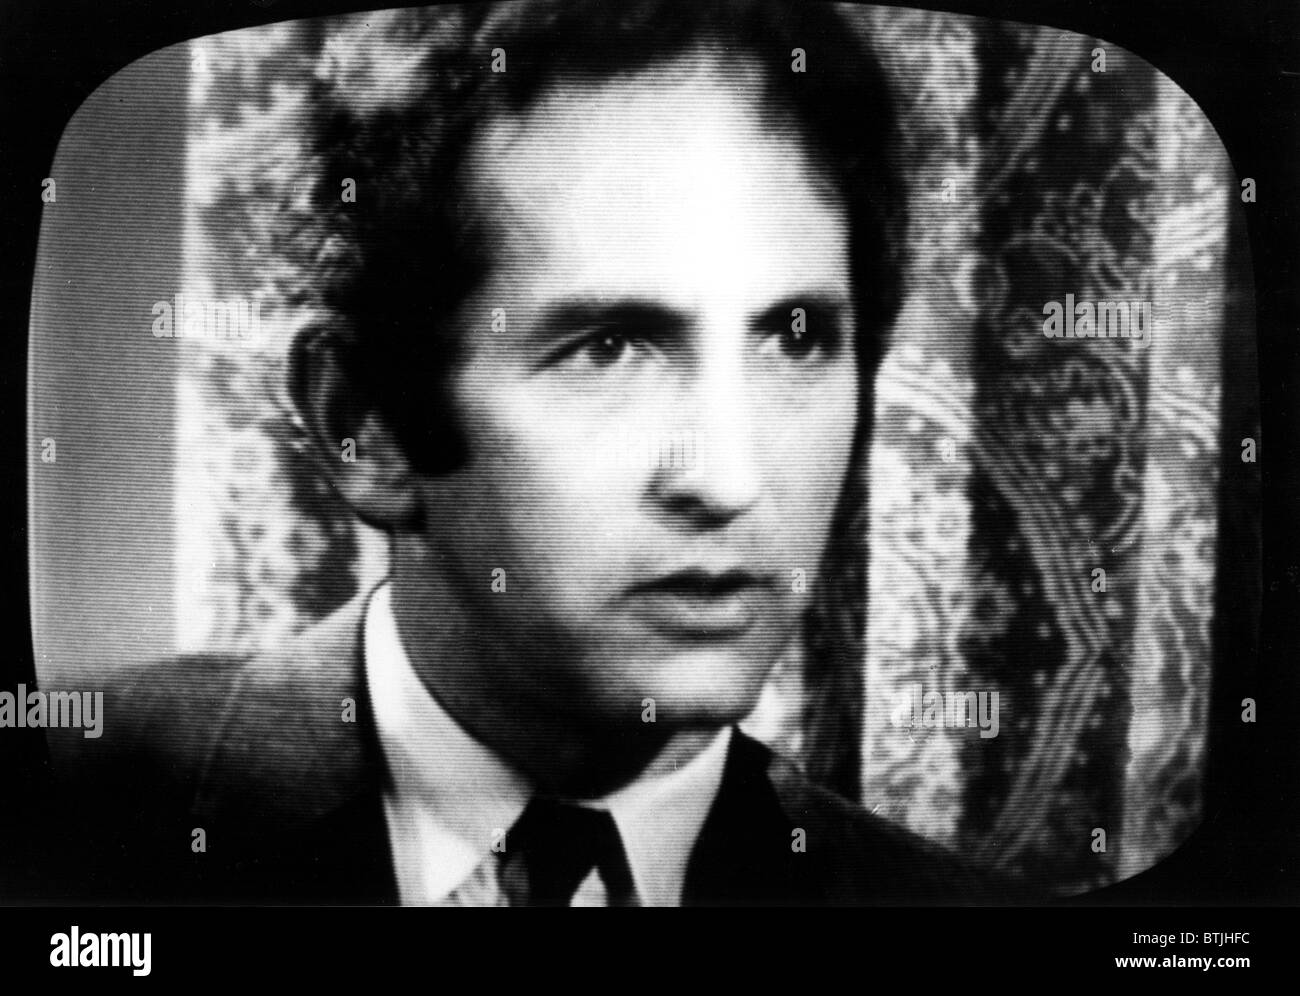 Pentagon Papers Defendant Daniel Ellsberg being interviewed on CBS Evening News. New York, NY, 06-23-71. Stock Photo